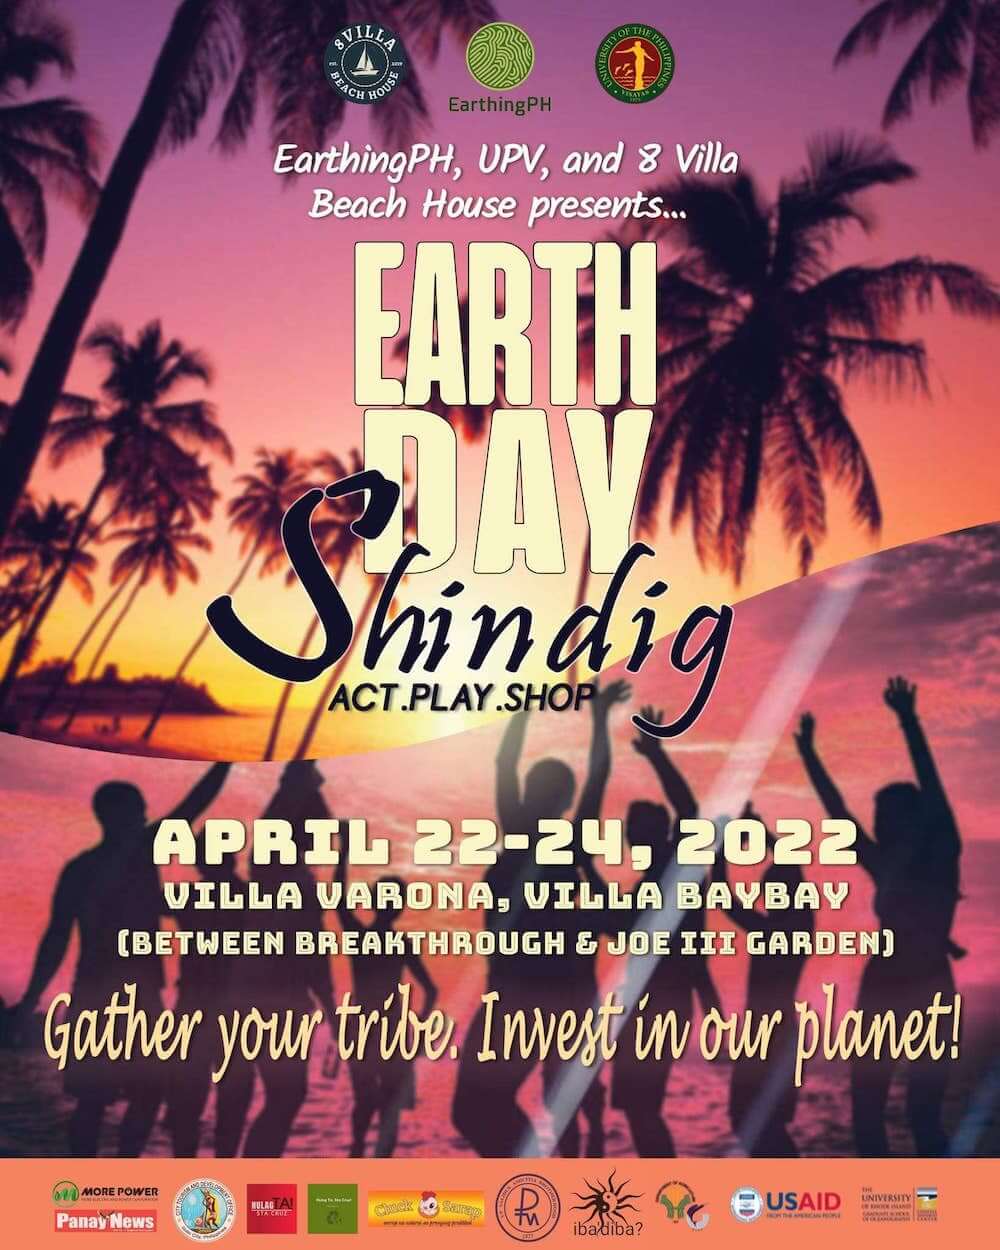 UPV joins 8 Villa Beach, Iloilo City Tourism Office for Earth Day Celebration